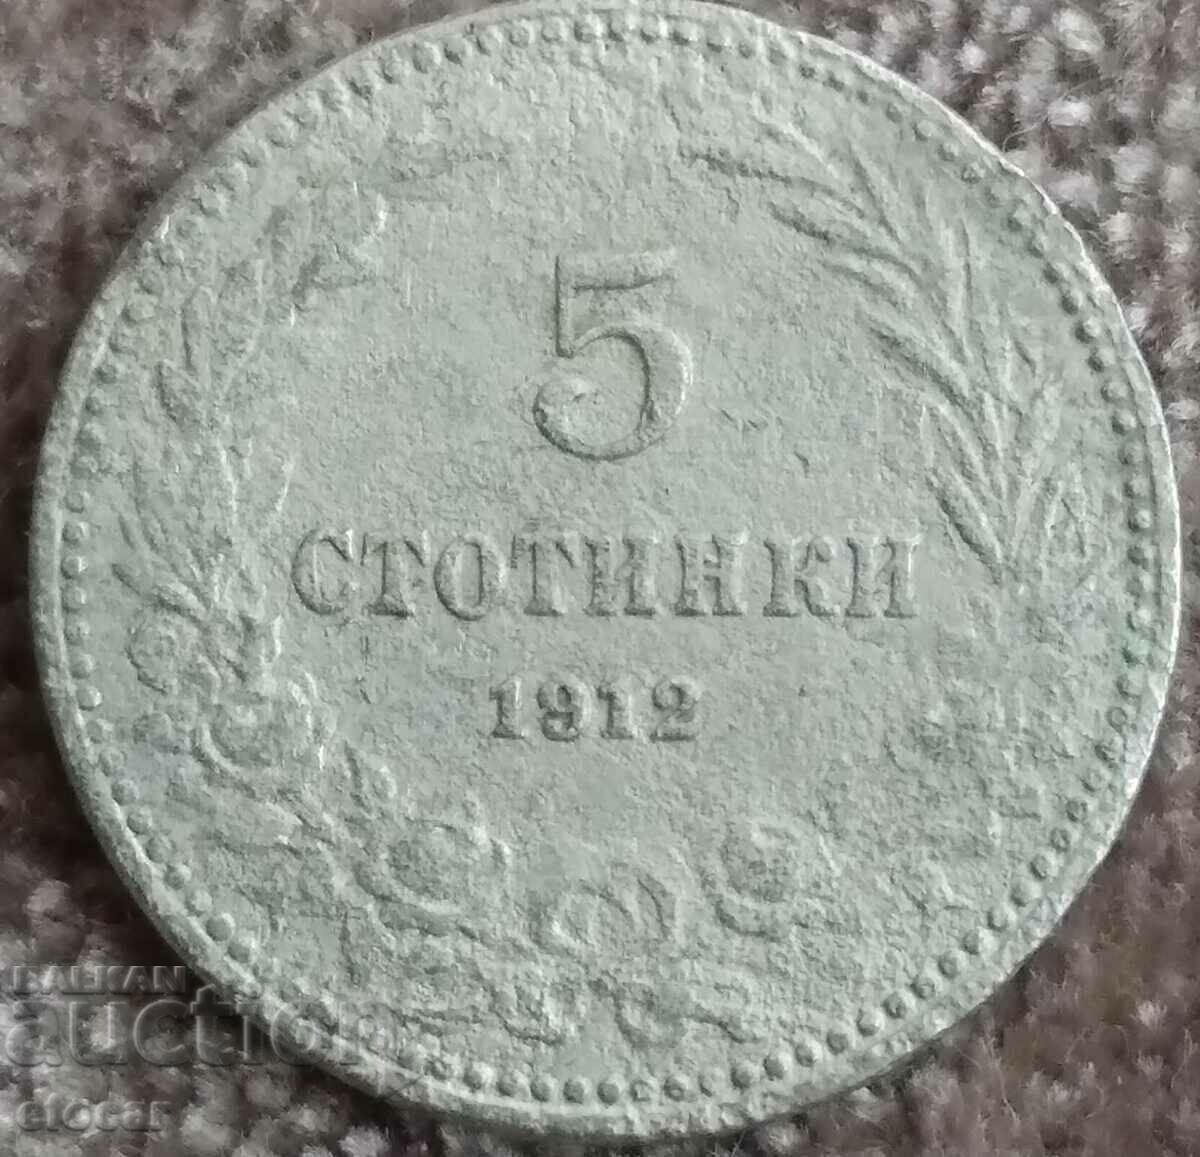 5 стотинки Царство  България БЗЦ